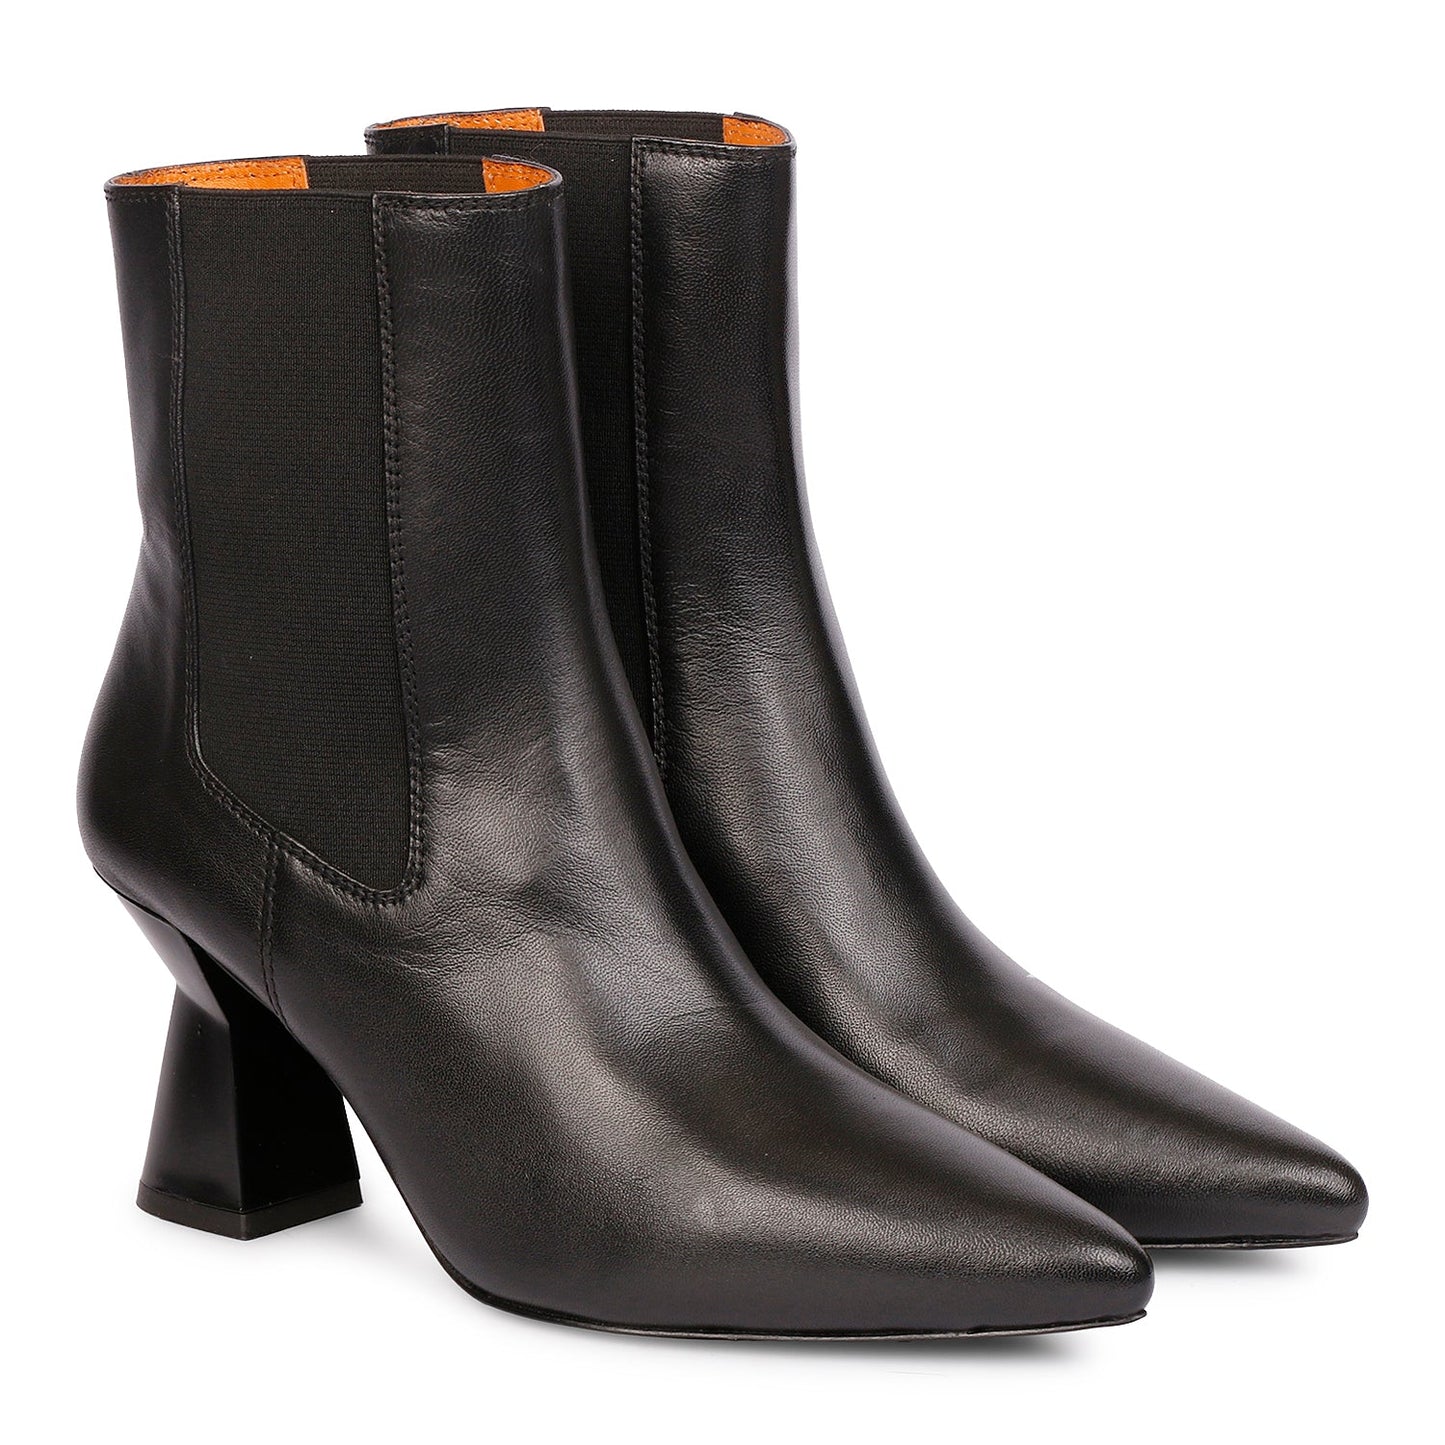 Elliana Nappa Leather Ankle Boots - Black